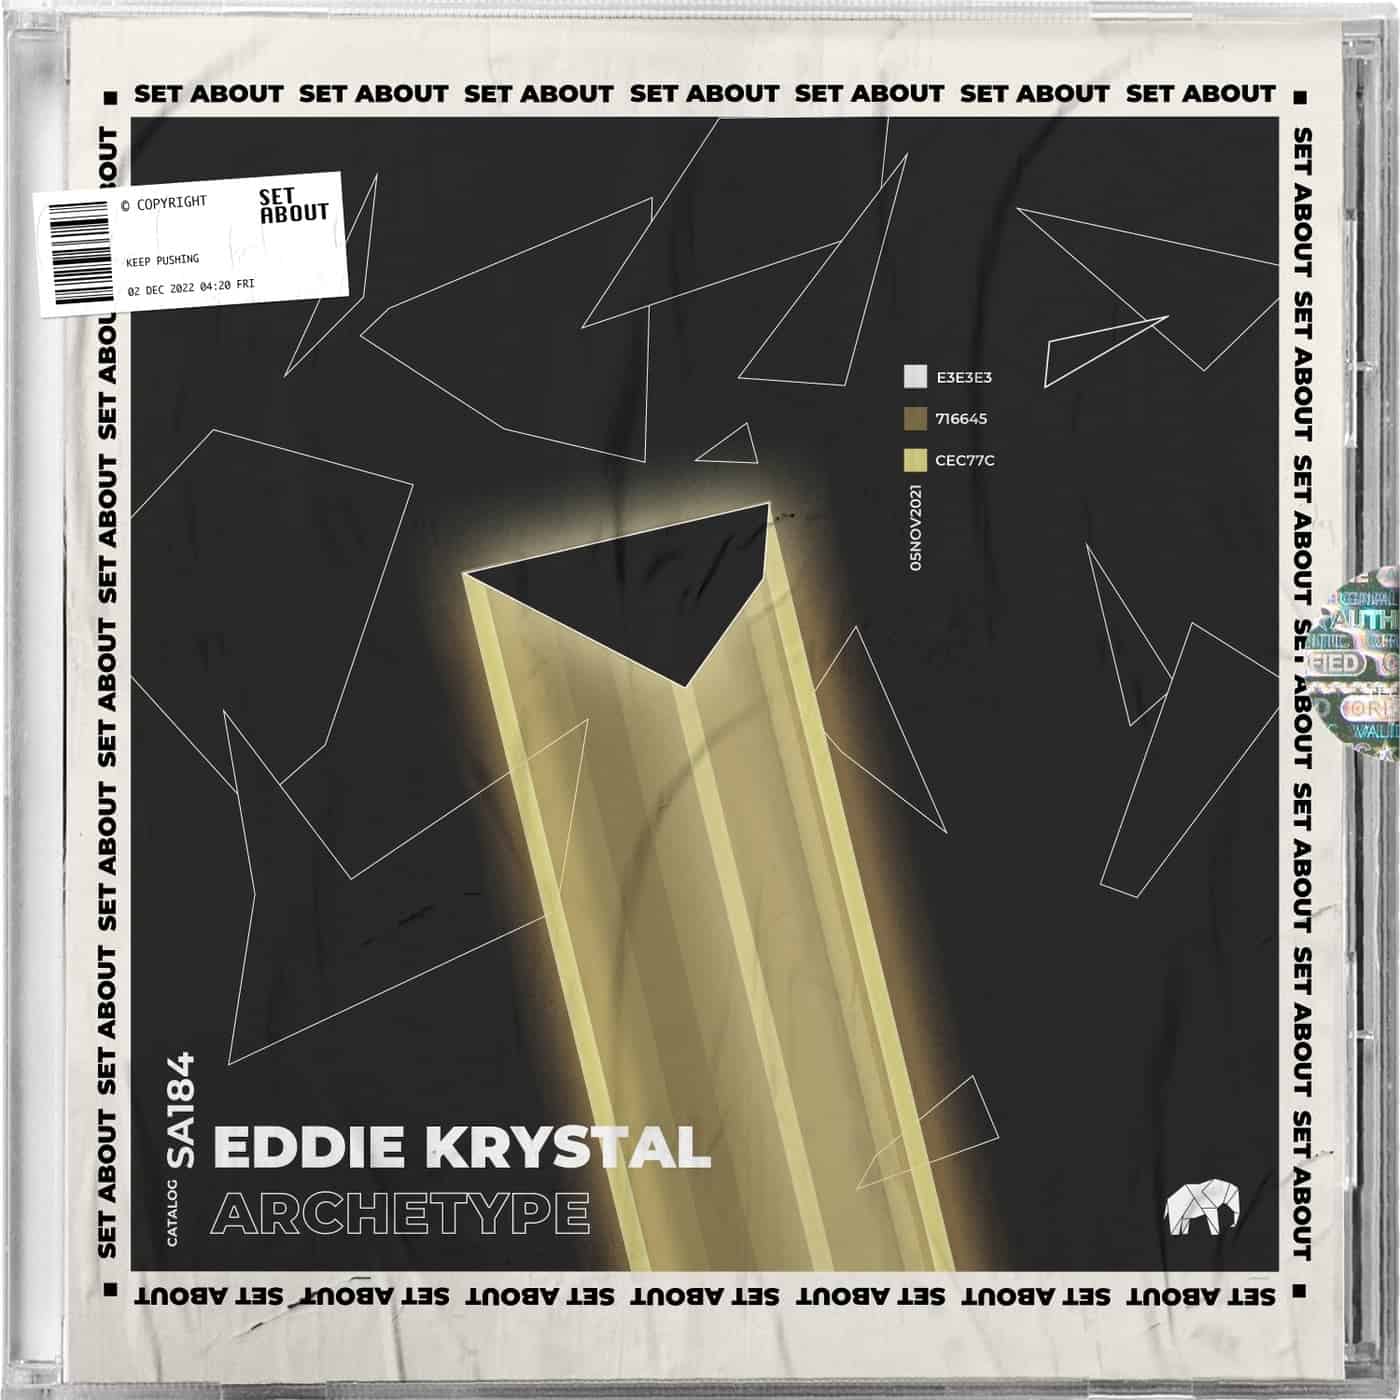 Download Eddie Krystal - Archetype on Electrobuzz